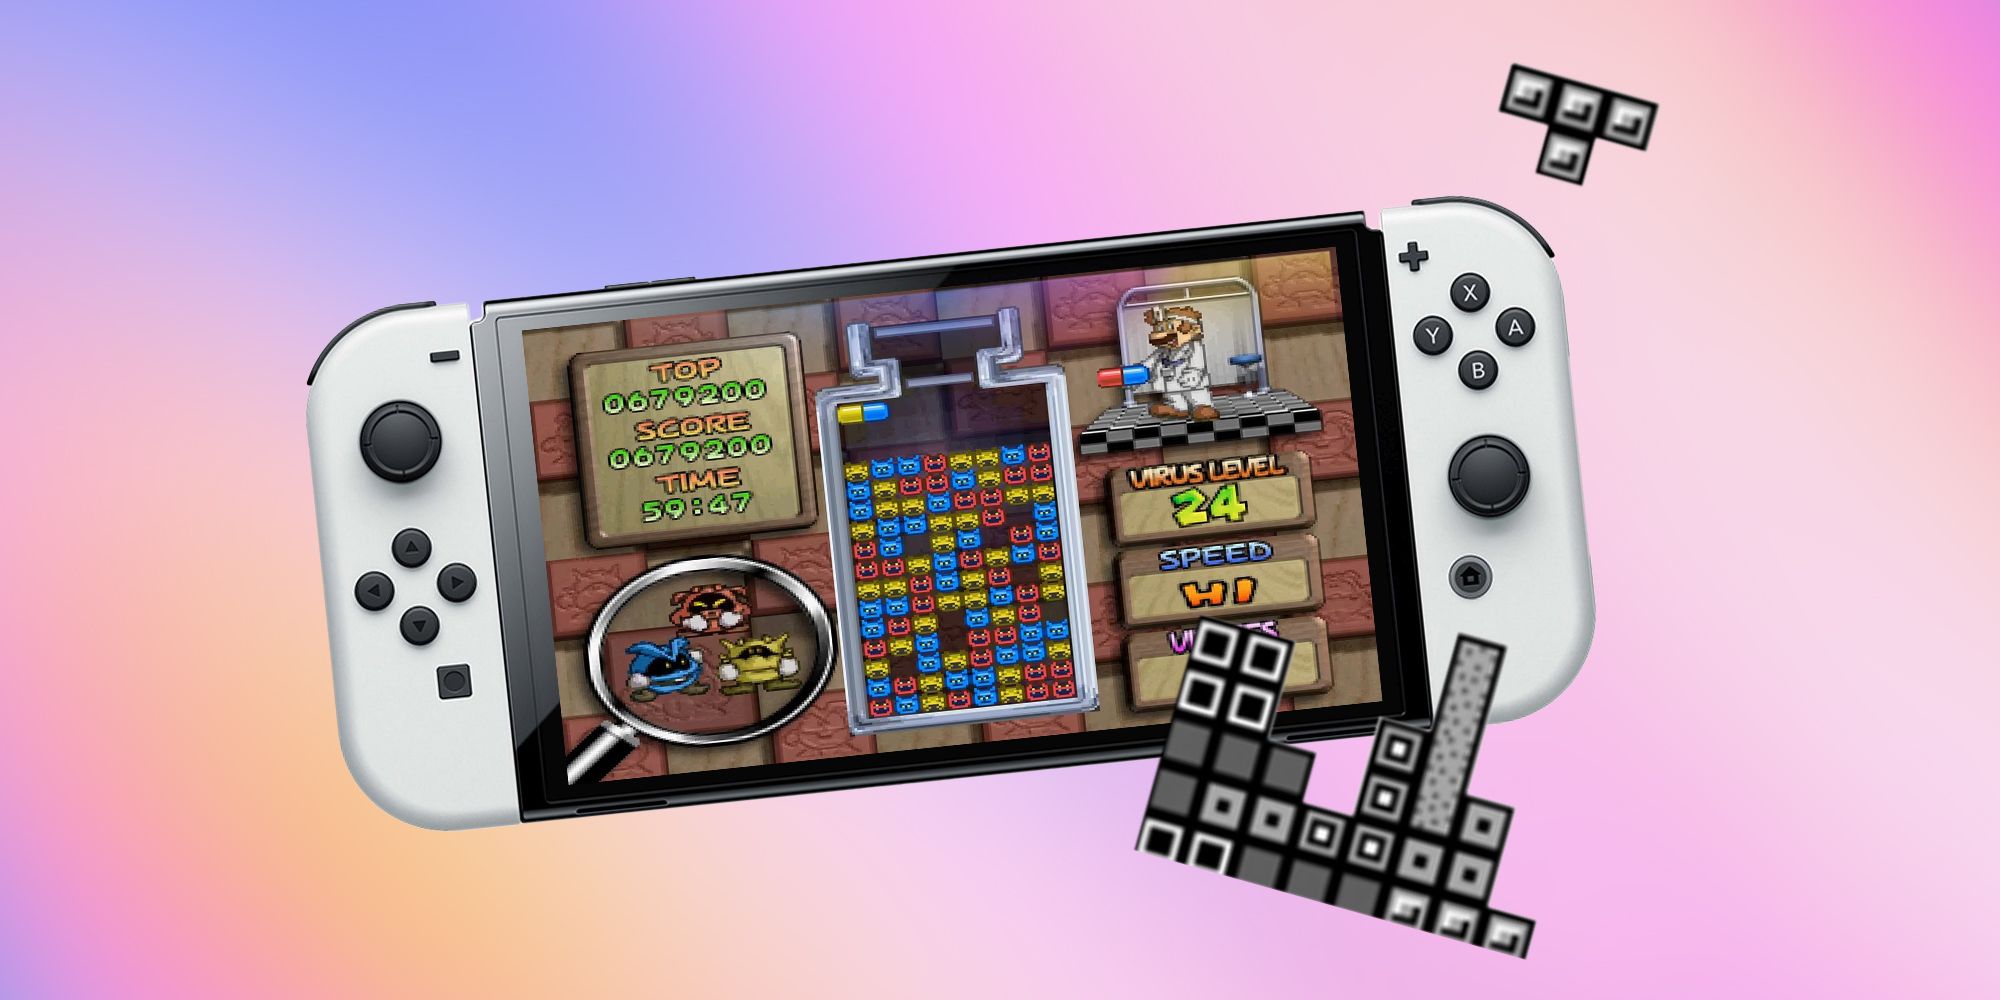 Tetris & Dr. Mario Game Only Super Nintendo SNES 2 games in